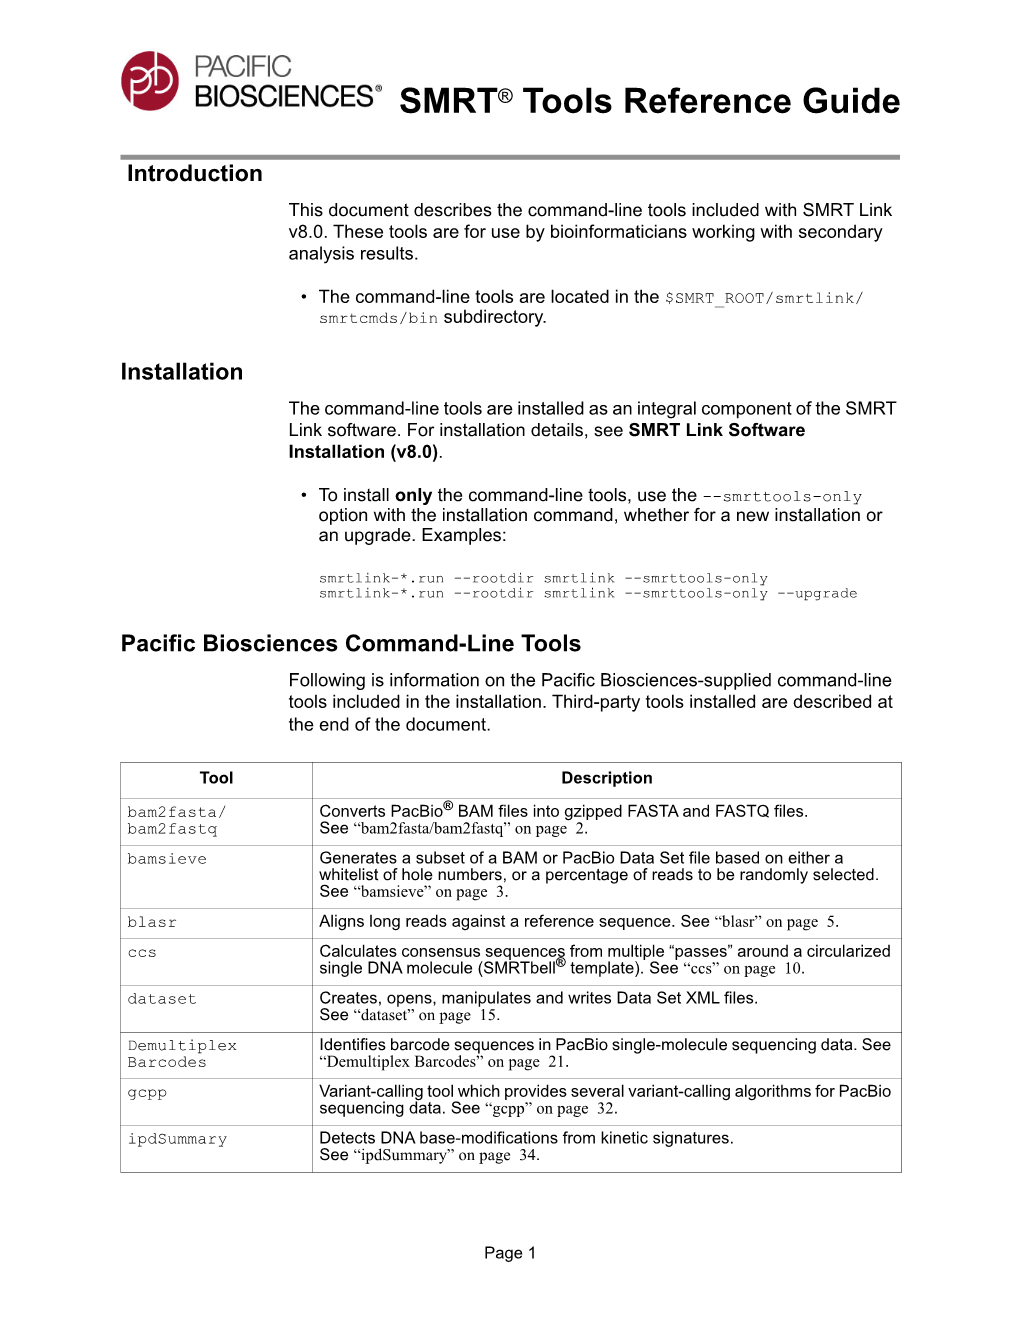 SMRT® Tools Reference Guide (V8.0)